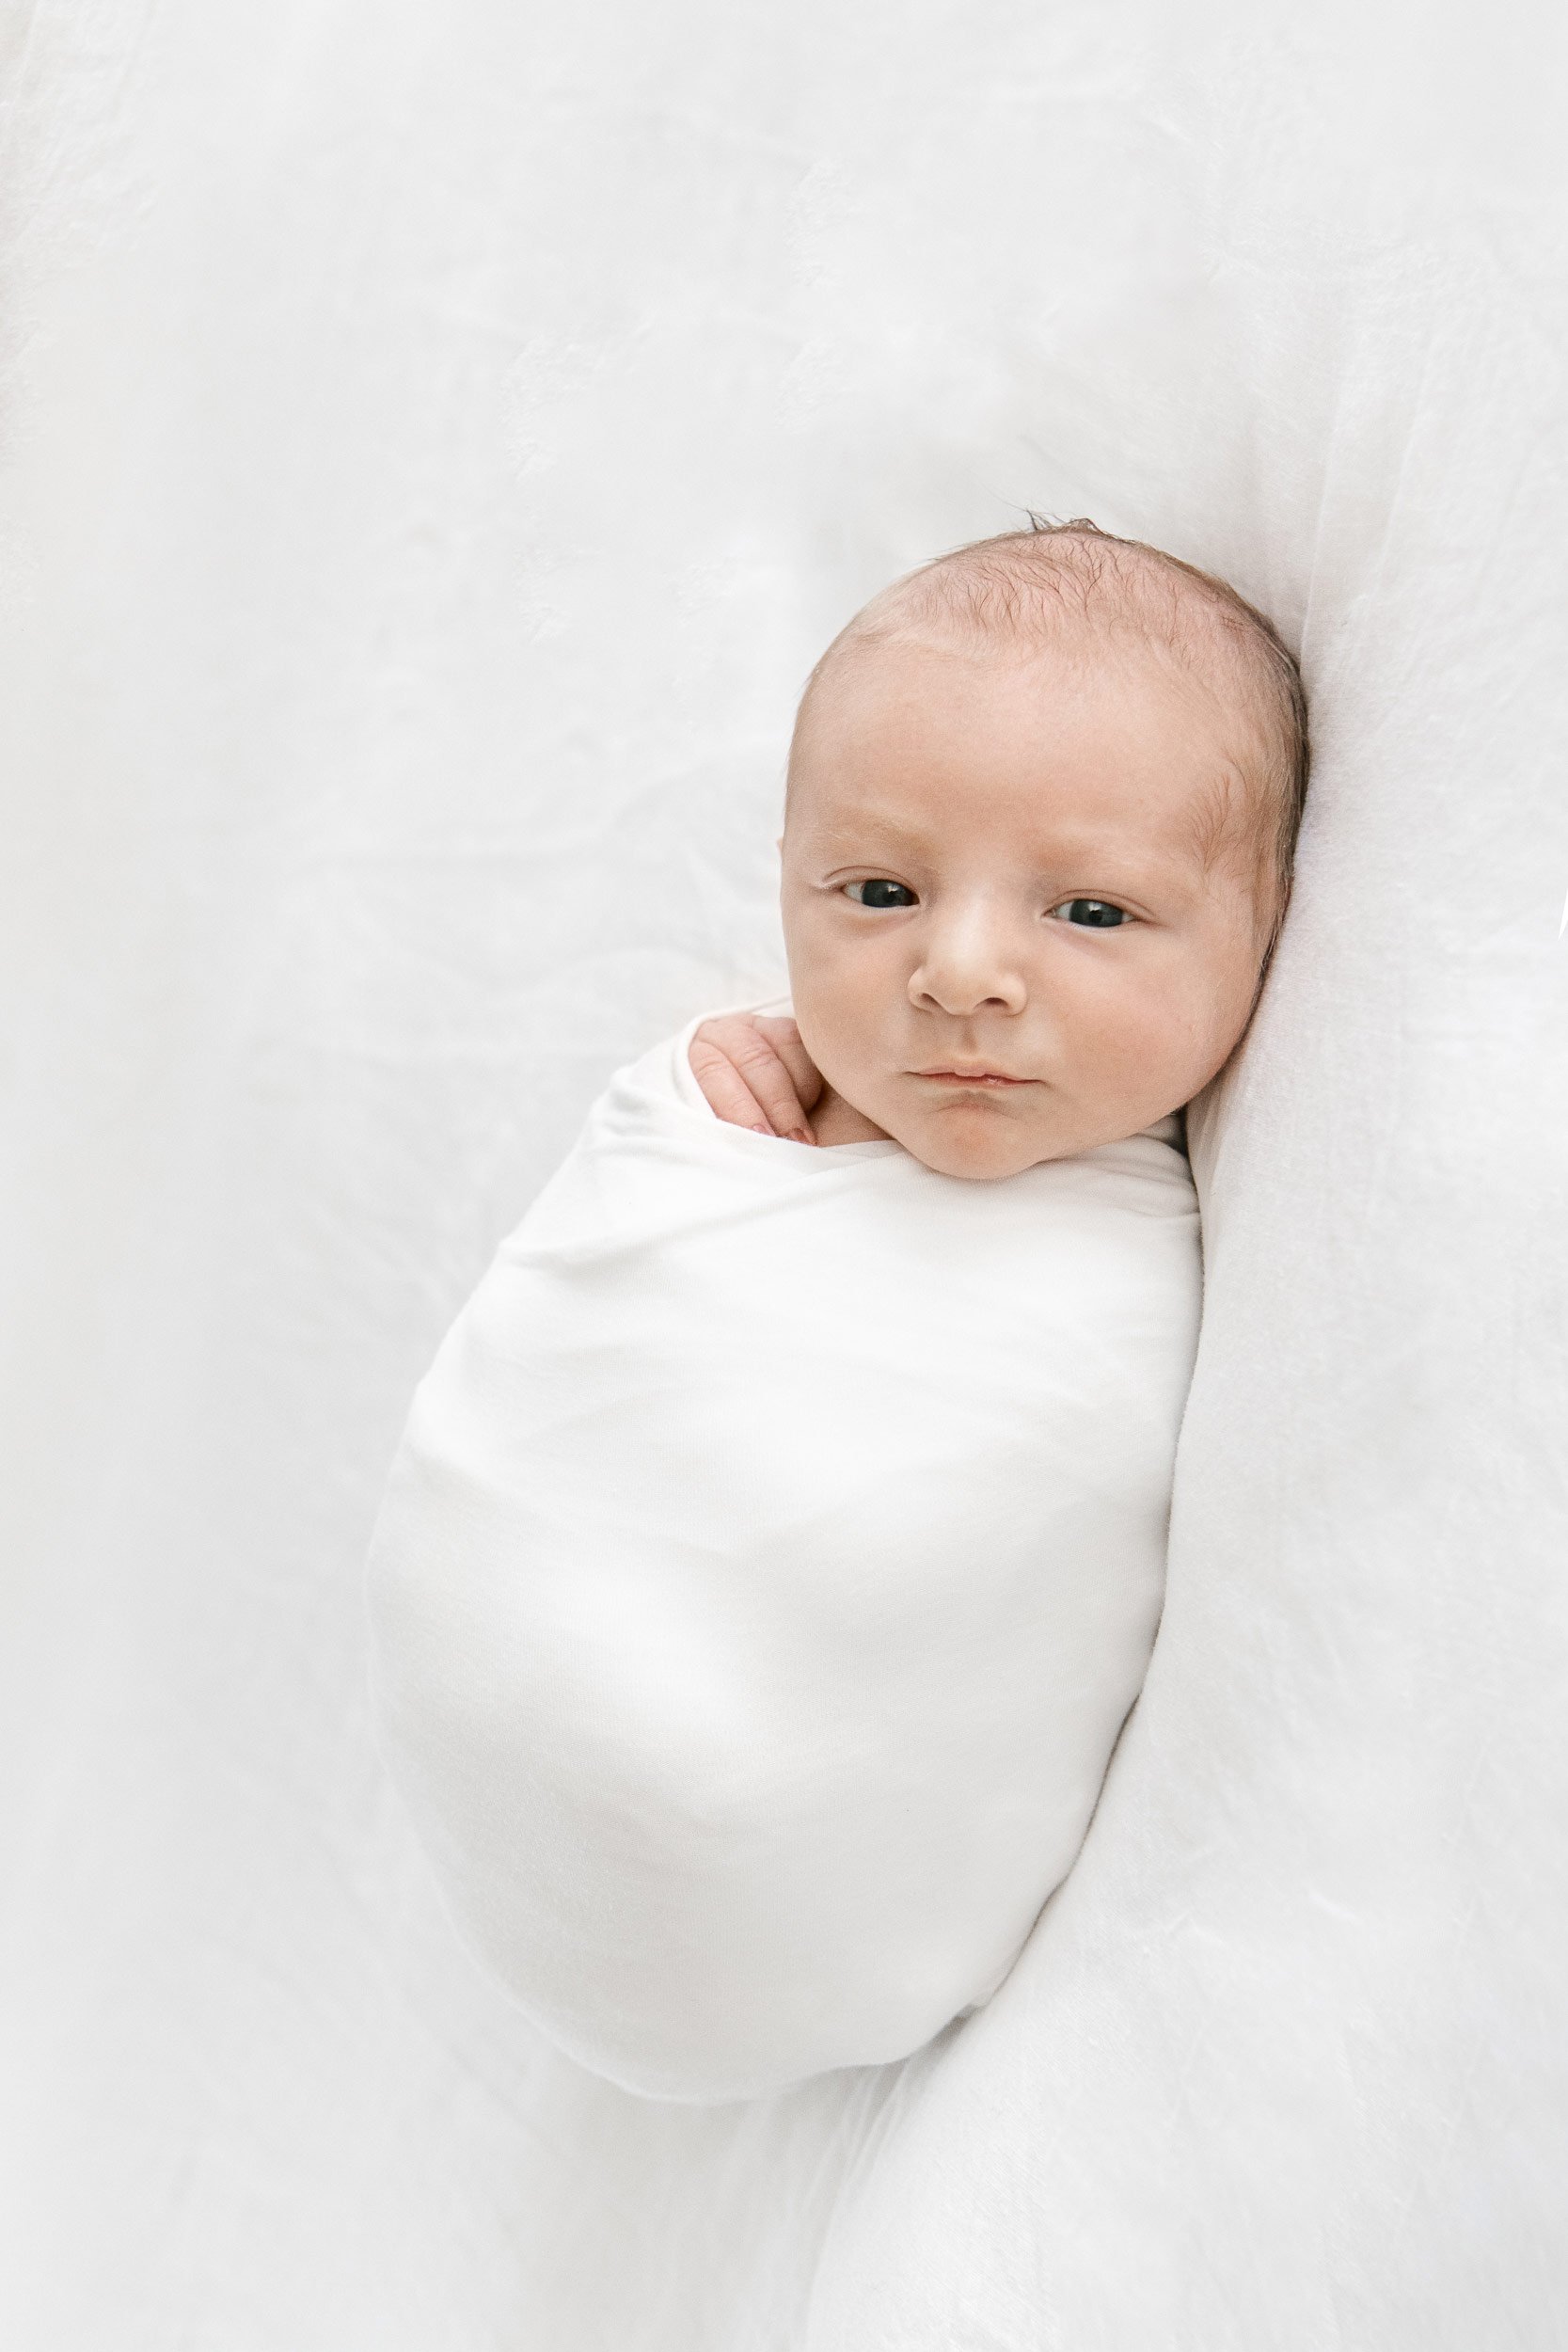  In Montclair, NJ Nicole Hawkins Photography captures a newborn baby portrait. Baby portraits newborn photography #NicoleHawkinsPhotography #InHomeNewborn #JerseyShoreNewborns #MontclairPhotographers #NewbornPhotography #baby #newborn 